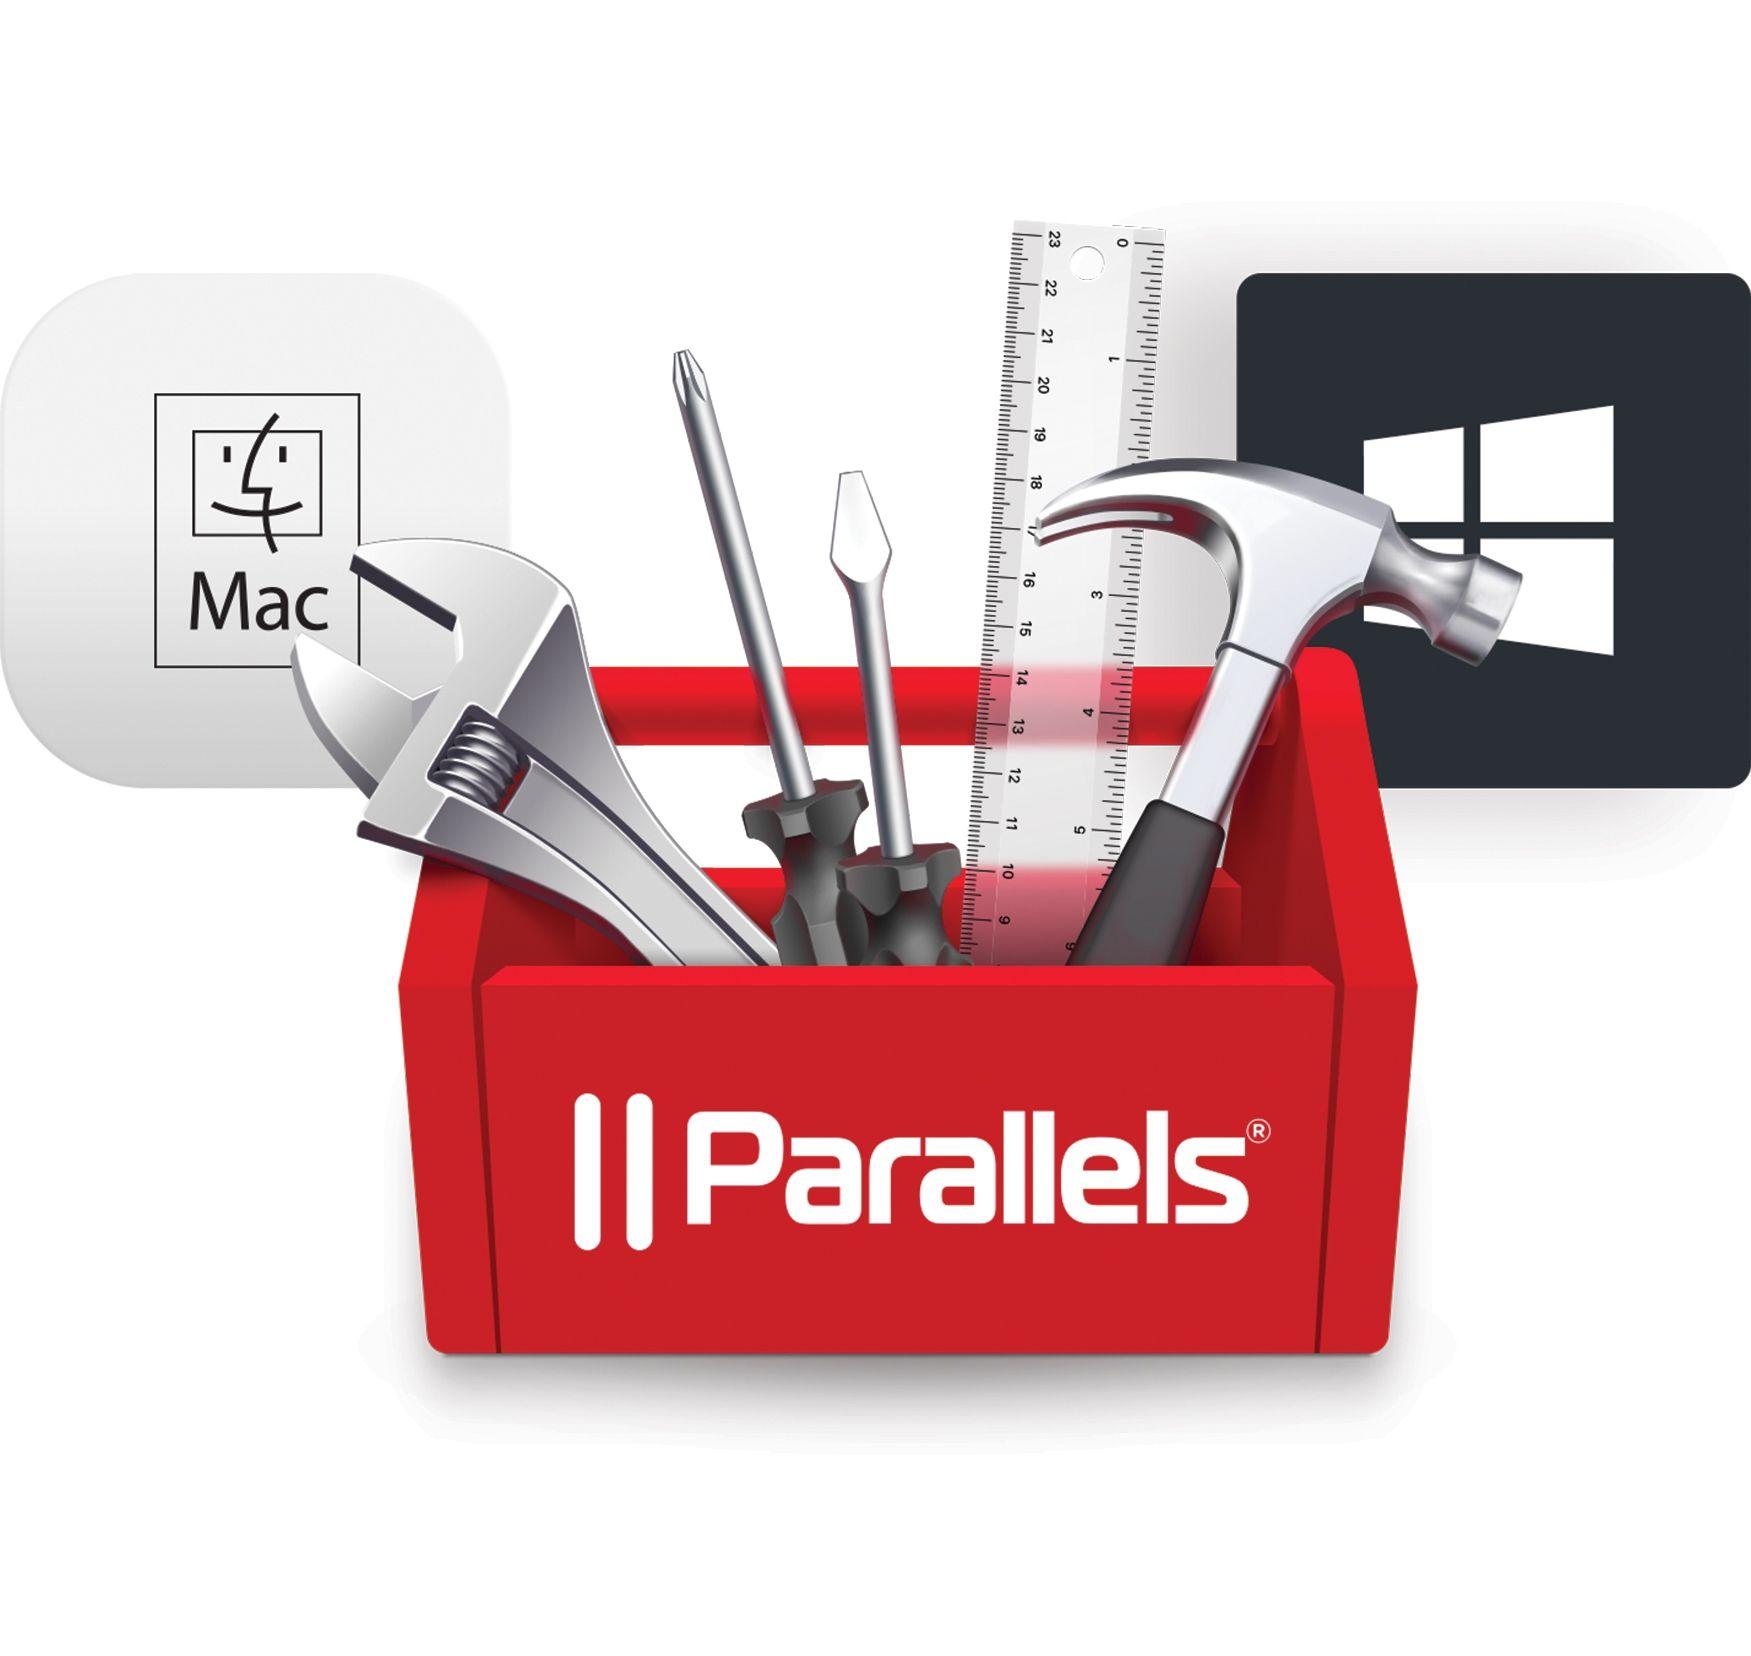 Parallels Logo - Brand Assets